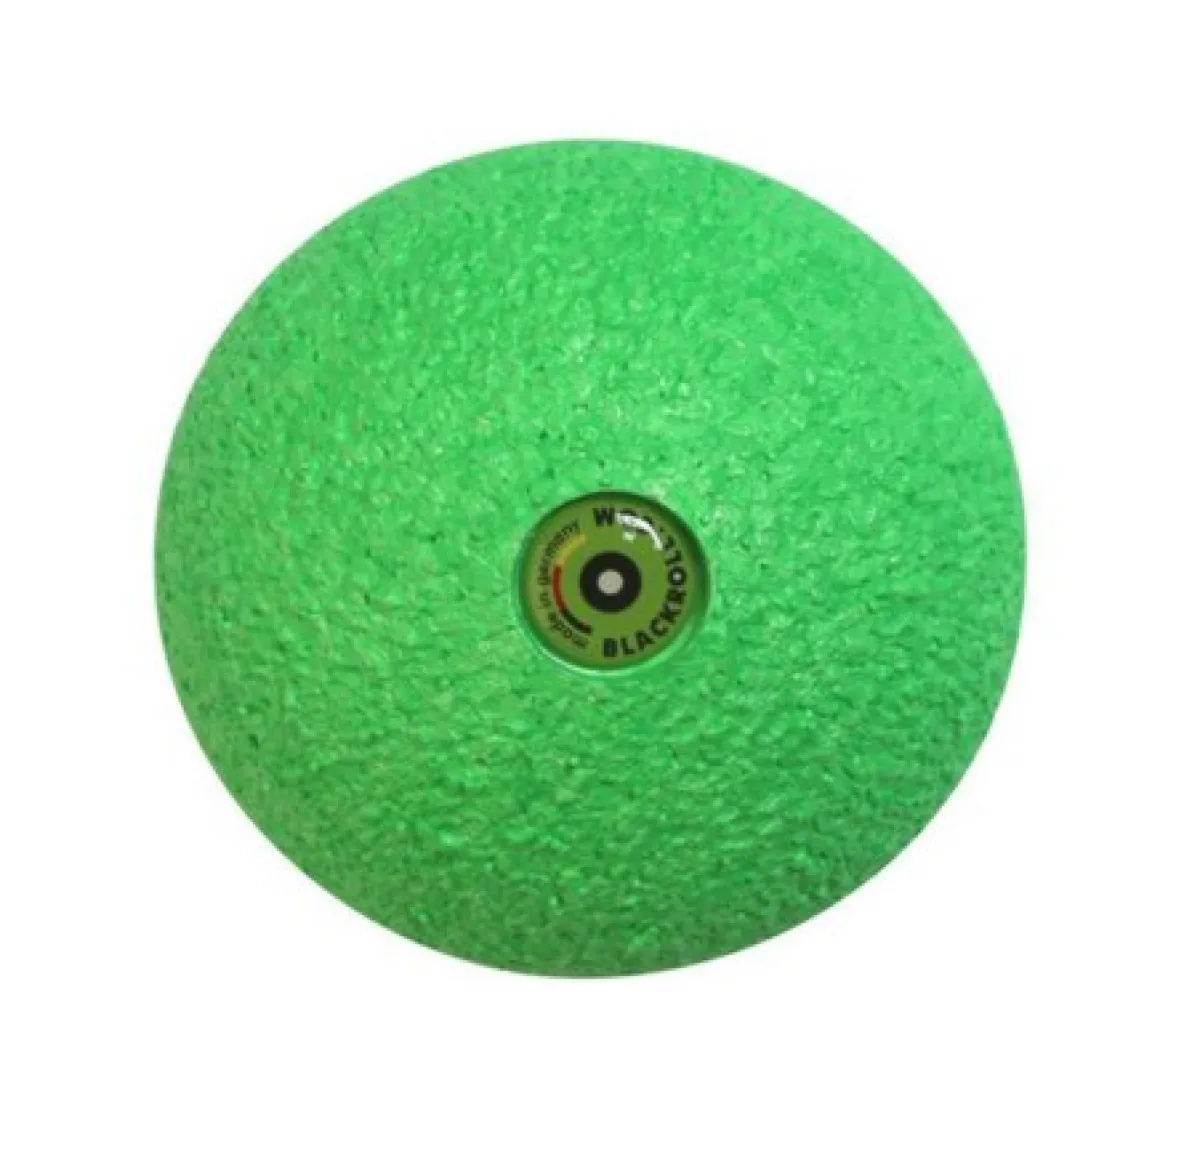 BLACKROLL BALL Fascia ball groen 8 cm